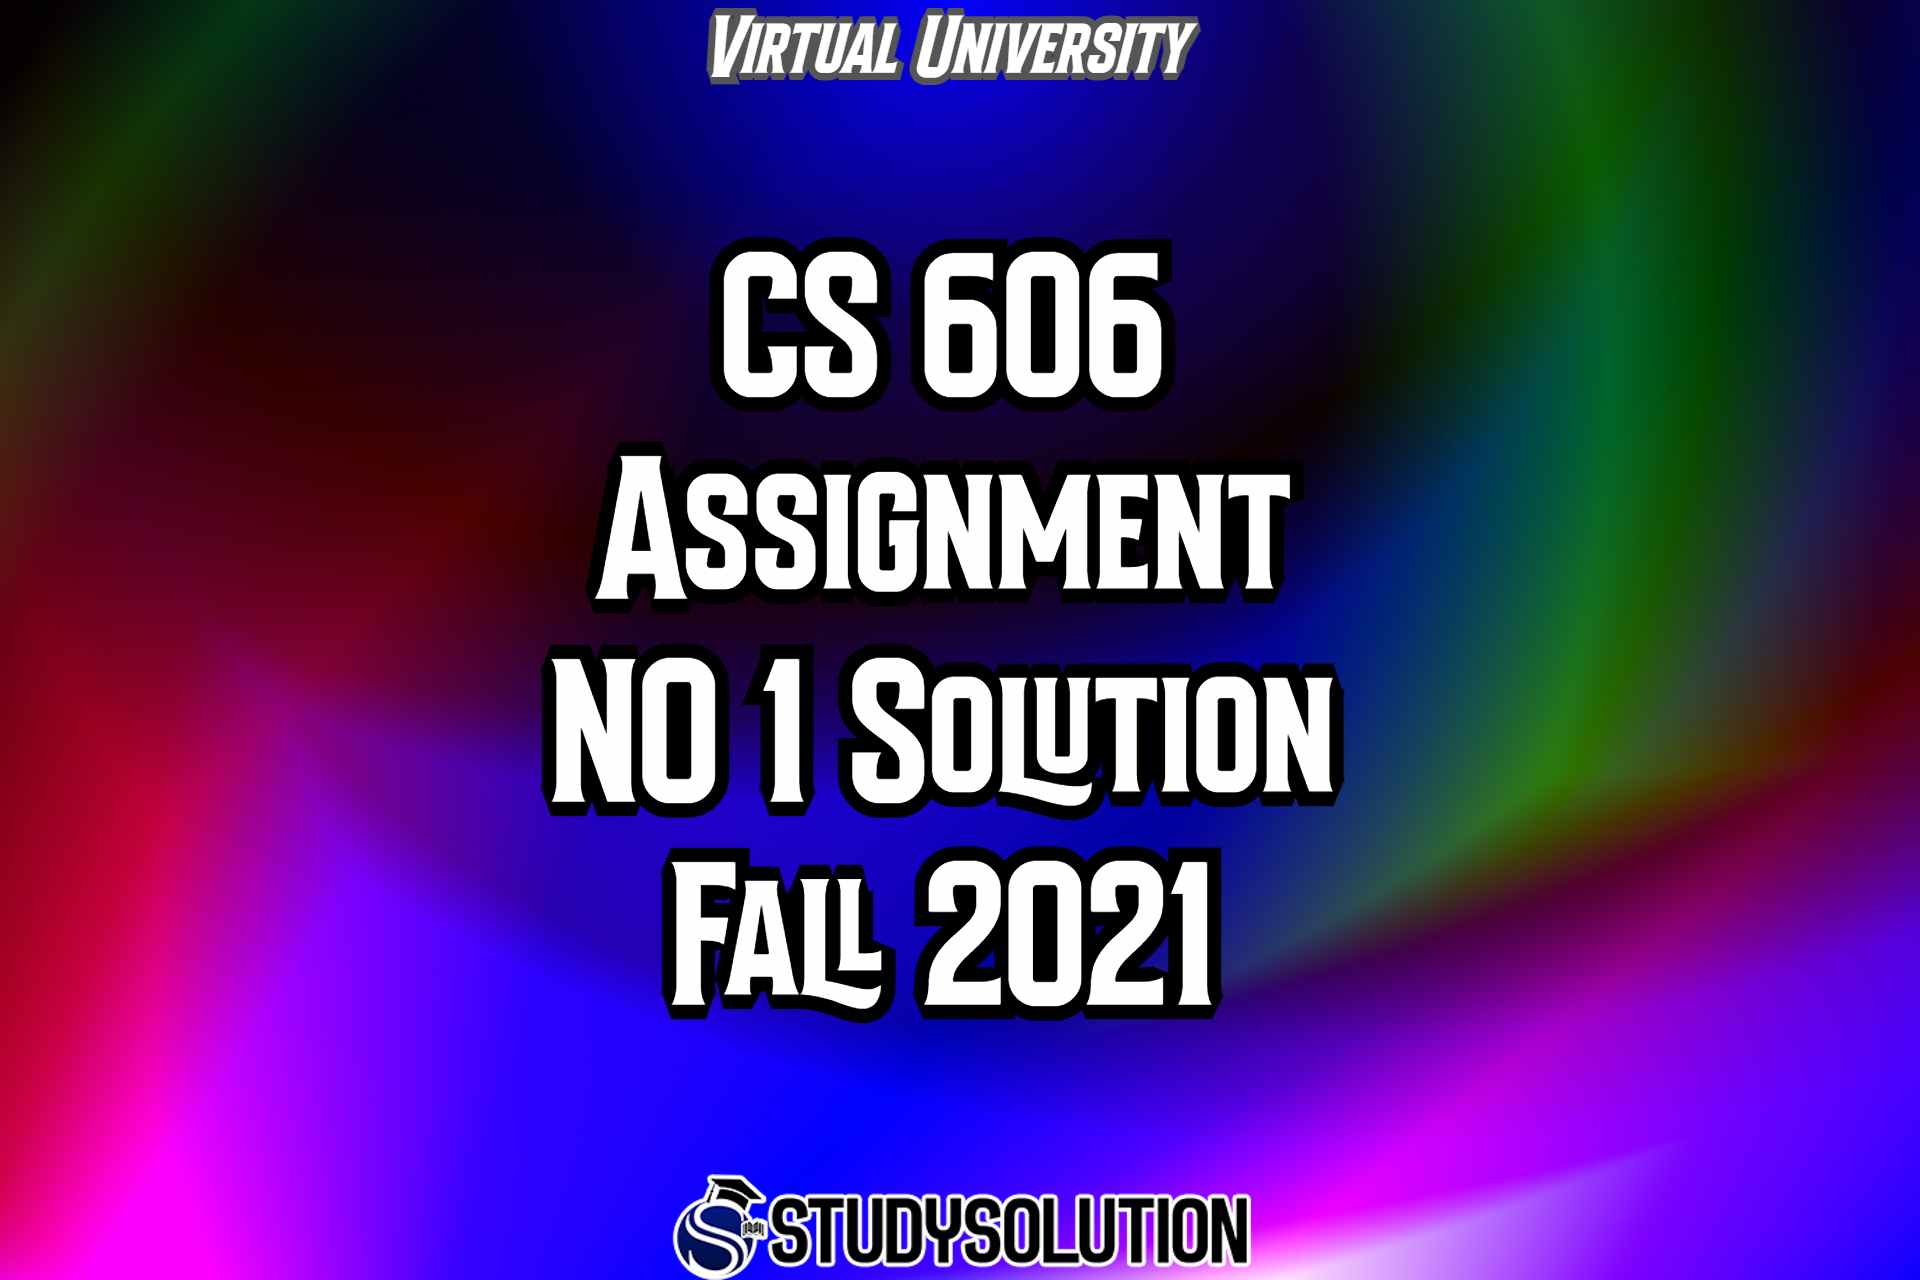 CS606 Assignment NO 1 Solution Fall 2021